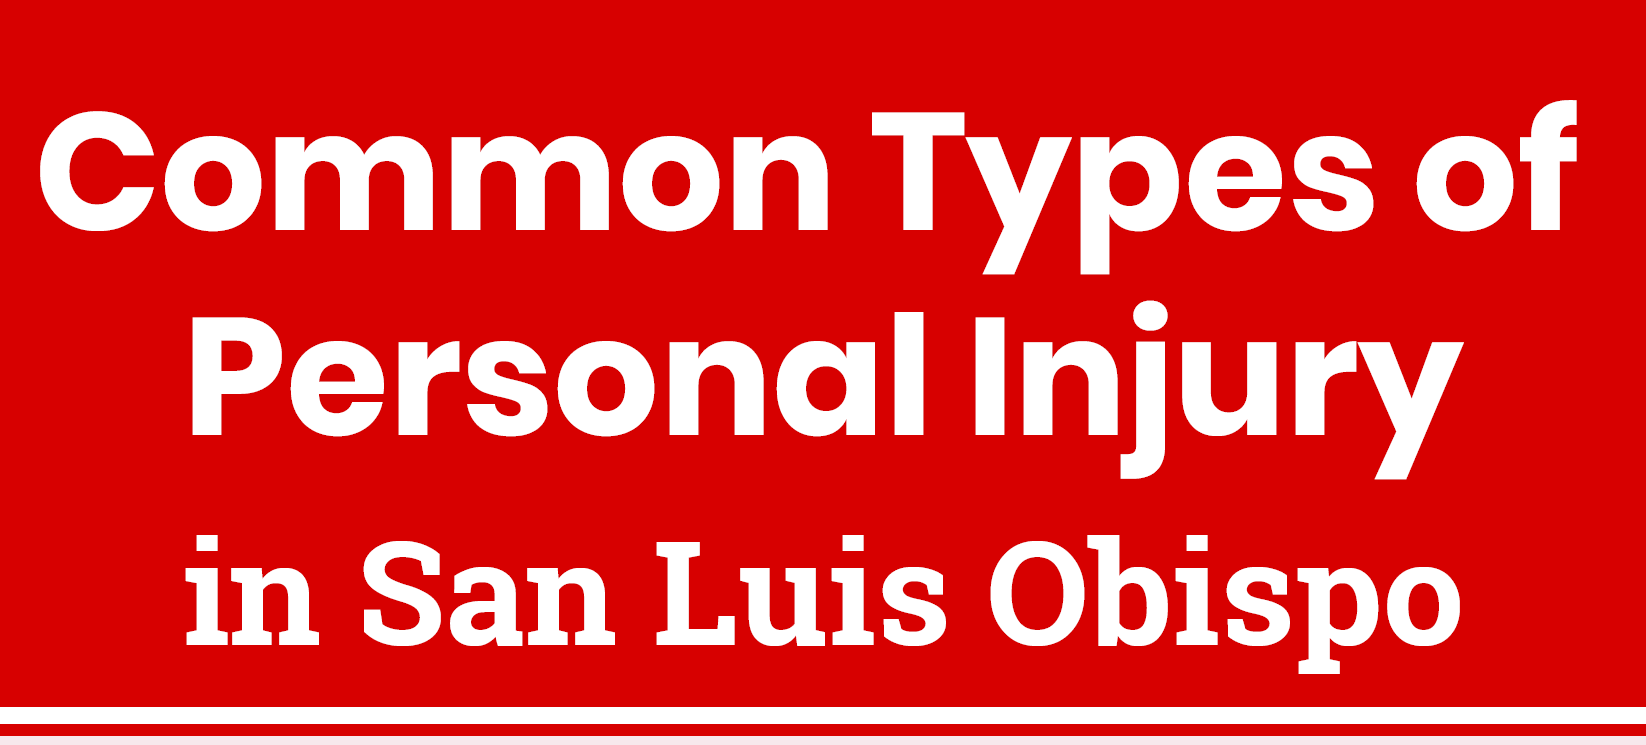 Common-Types-of-Personal-Injury-in-San-Luis-Obispo-header